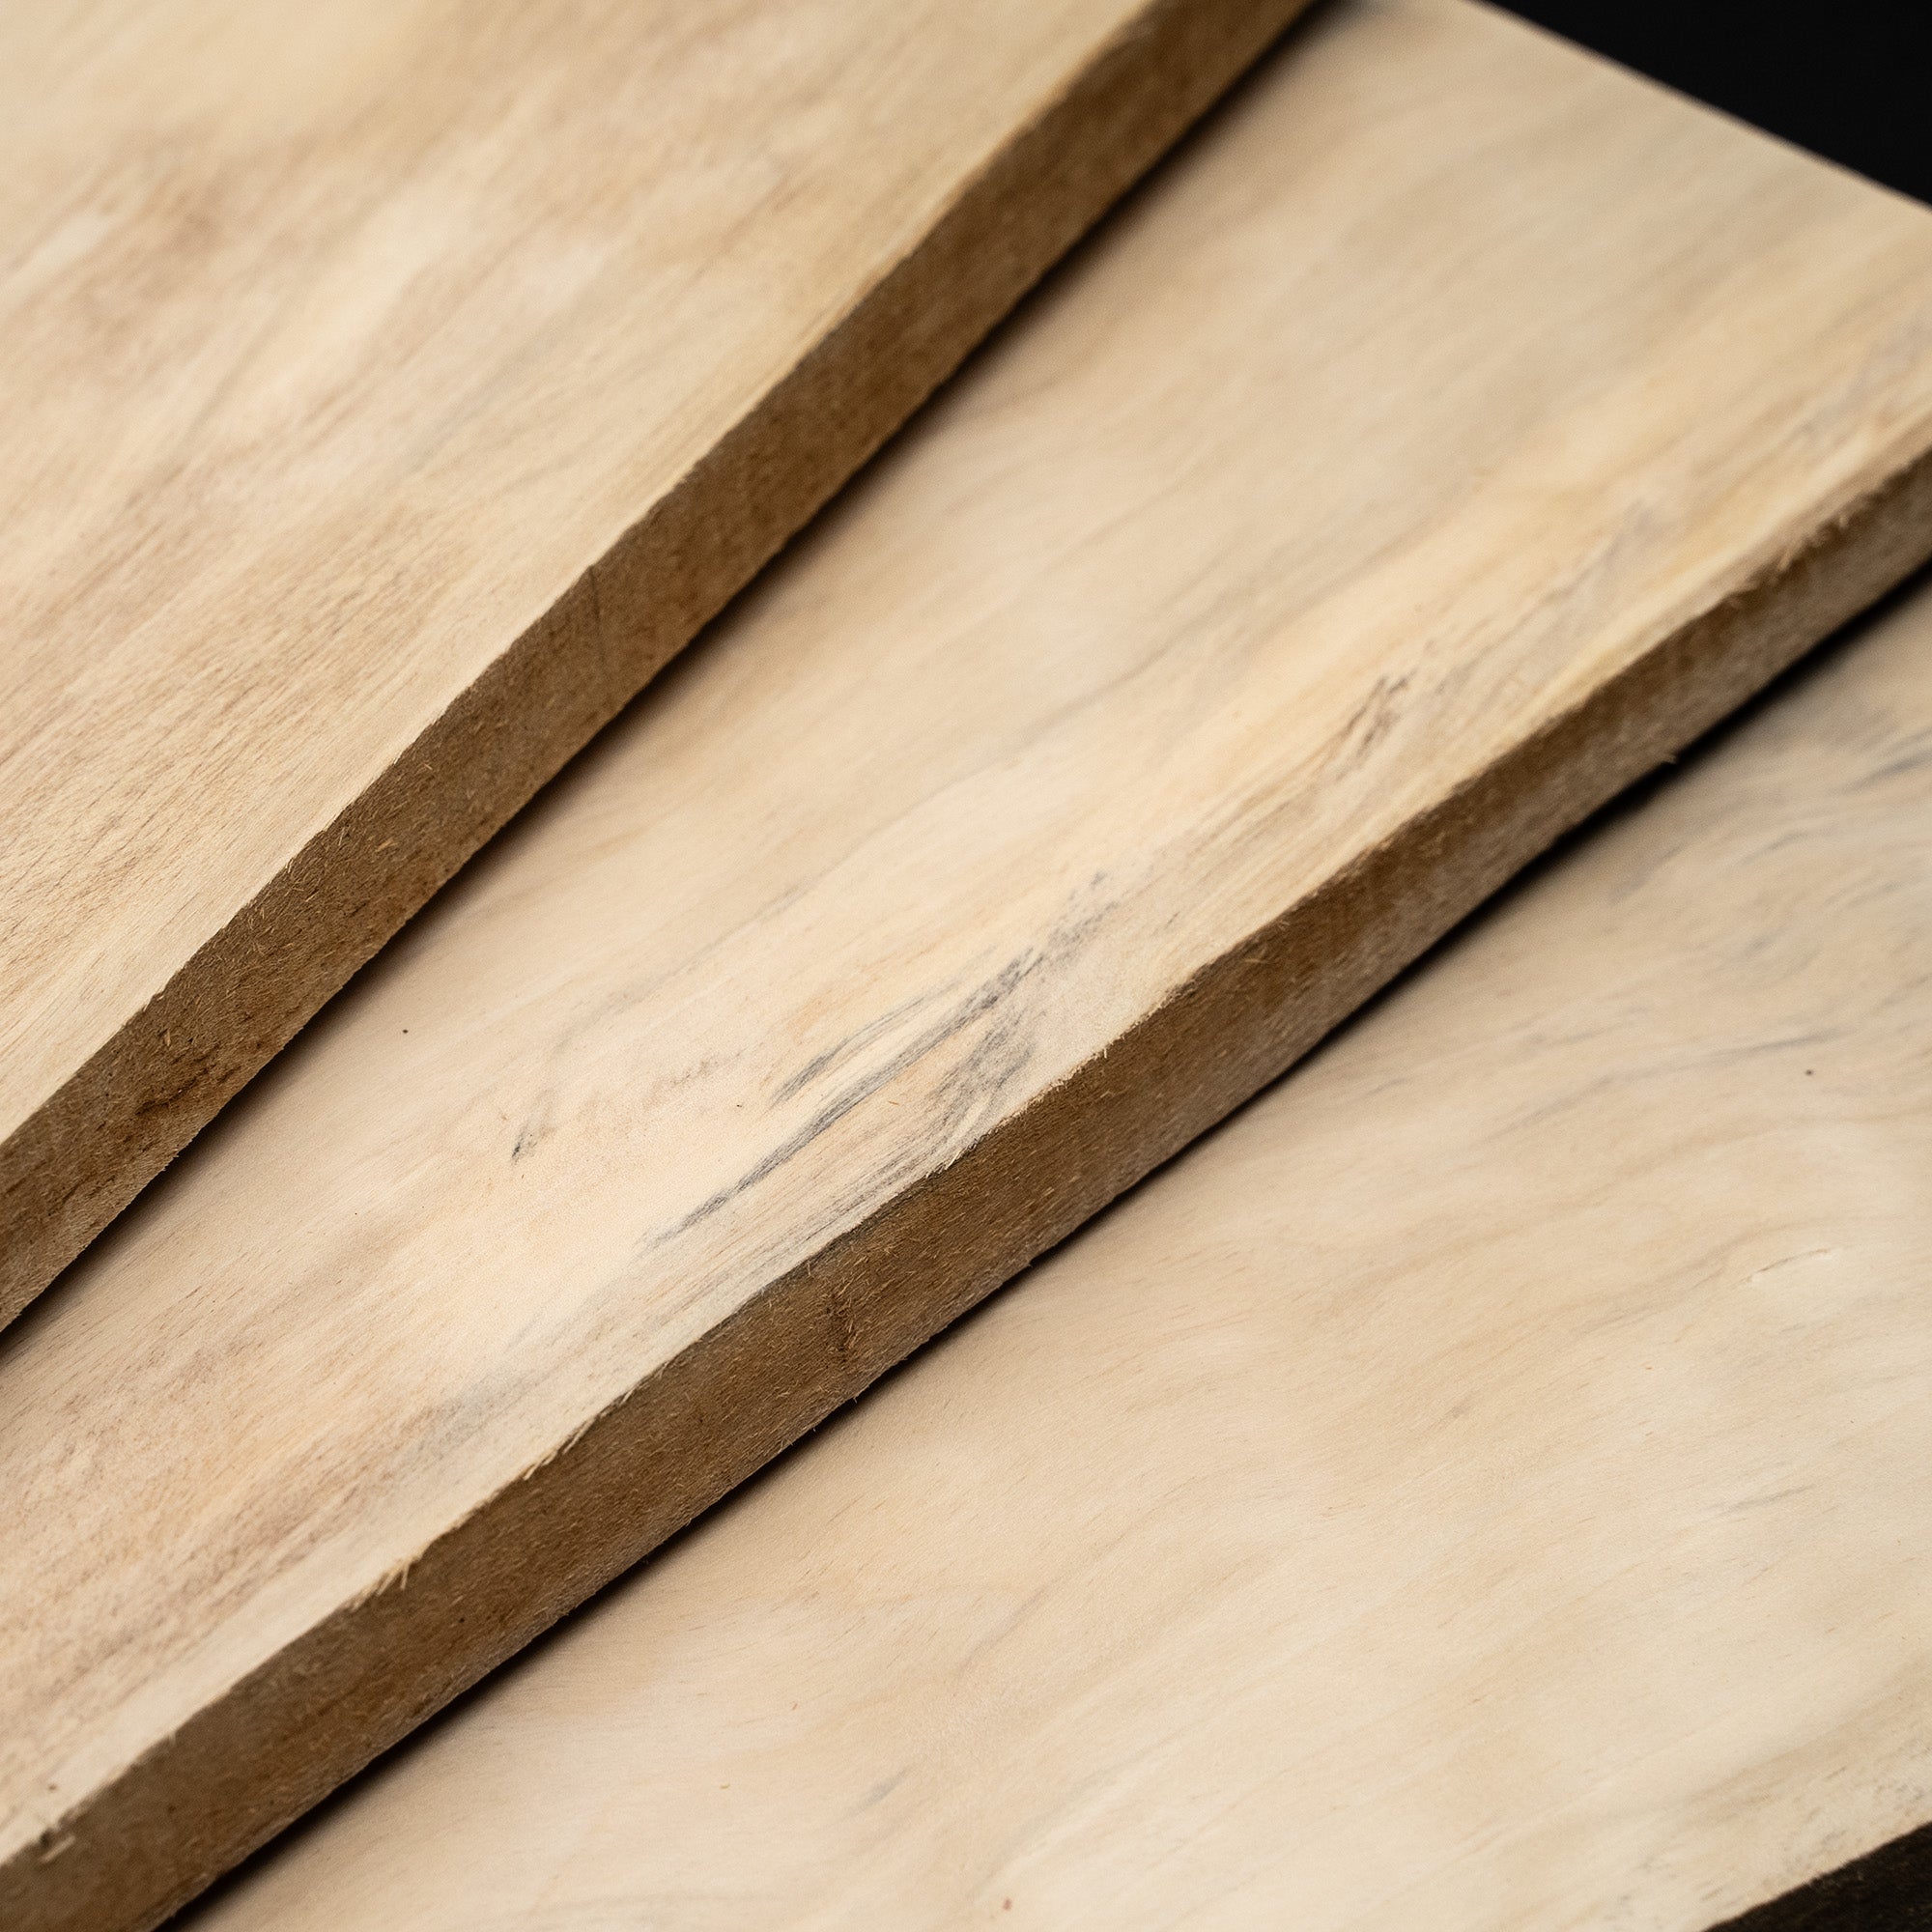 4 HARD MAPLE 3/4 x 4 x 36 Lumber Wood Boards KILN DRY DIY Shelf Sign  Craft